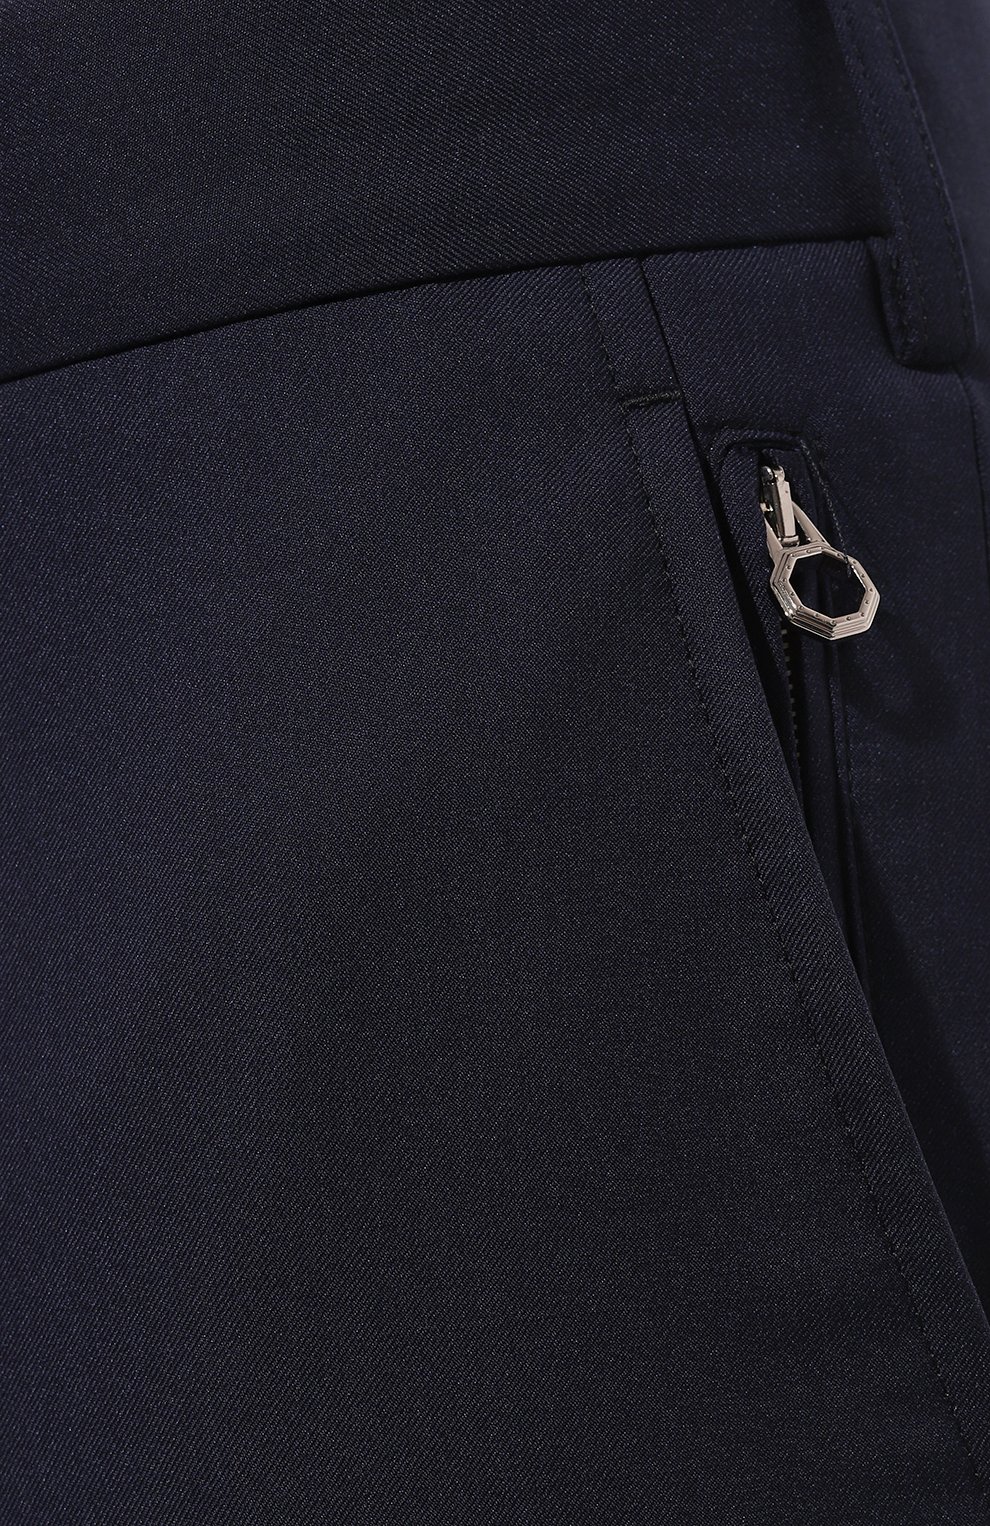 Мужские брюки и з шерсти и шелка STEFANO RICCI темно-синего цвета, арт. M5T22SR7T2/WK002H | Фото 5 (Материал внешний: Шерсть; Длина (брюки, джинсы): Стандартные; Материал сплава: Проставлено; Стили: Классический; Случай: Формальный; Драгоценные камни: Проставлено; Материал подклада: Хлопок)